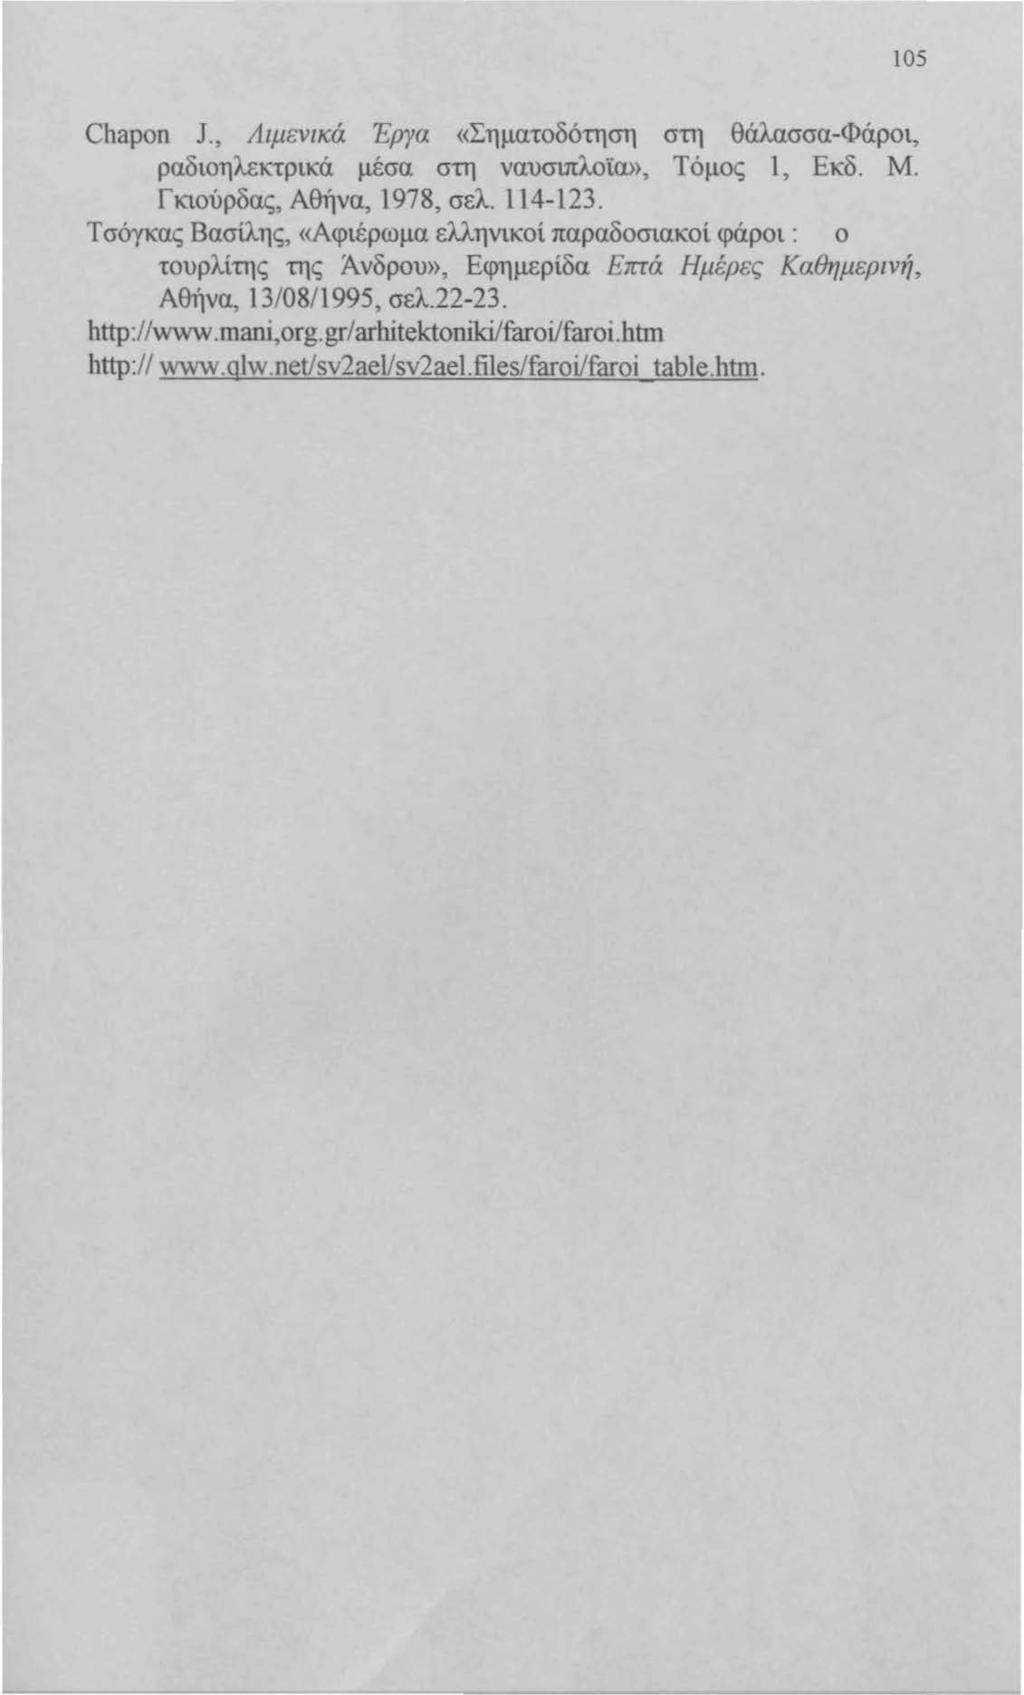 105 Chapon J., Λιμενικά Έργα «Σηματοδότηση στη θάλασσα-φάροι, ραδιοηλεκτρικά μέσα στη ναυσιπλοϊω>, Τόμος 1, Εκ:δ. Μ. Γκιούρδας, Αθήνα, 1978, σελ. 114-123.